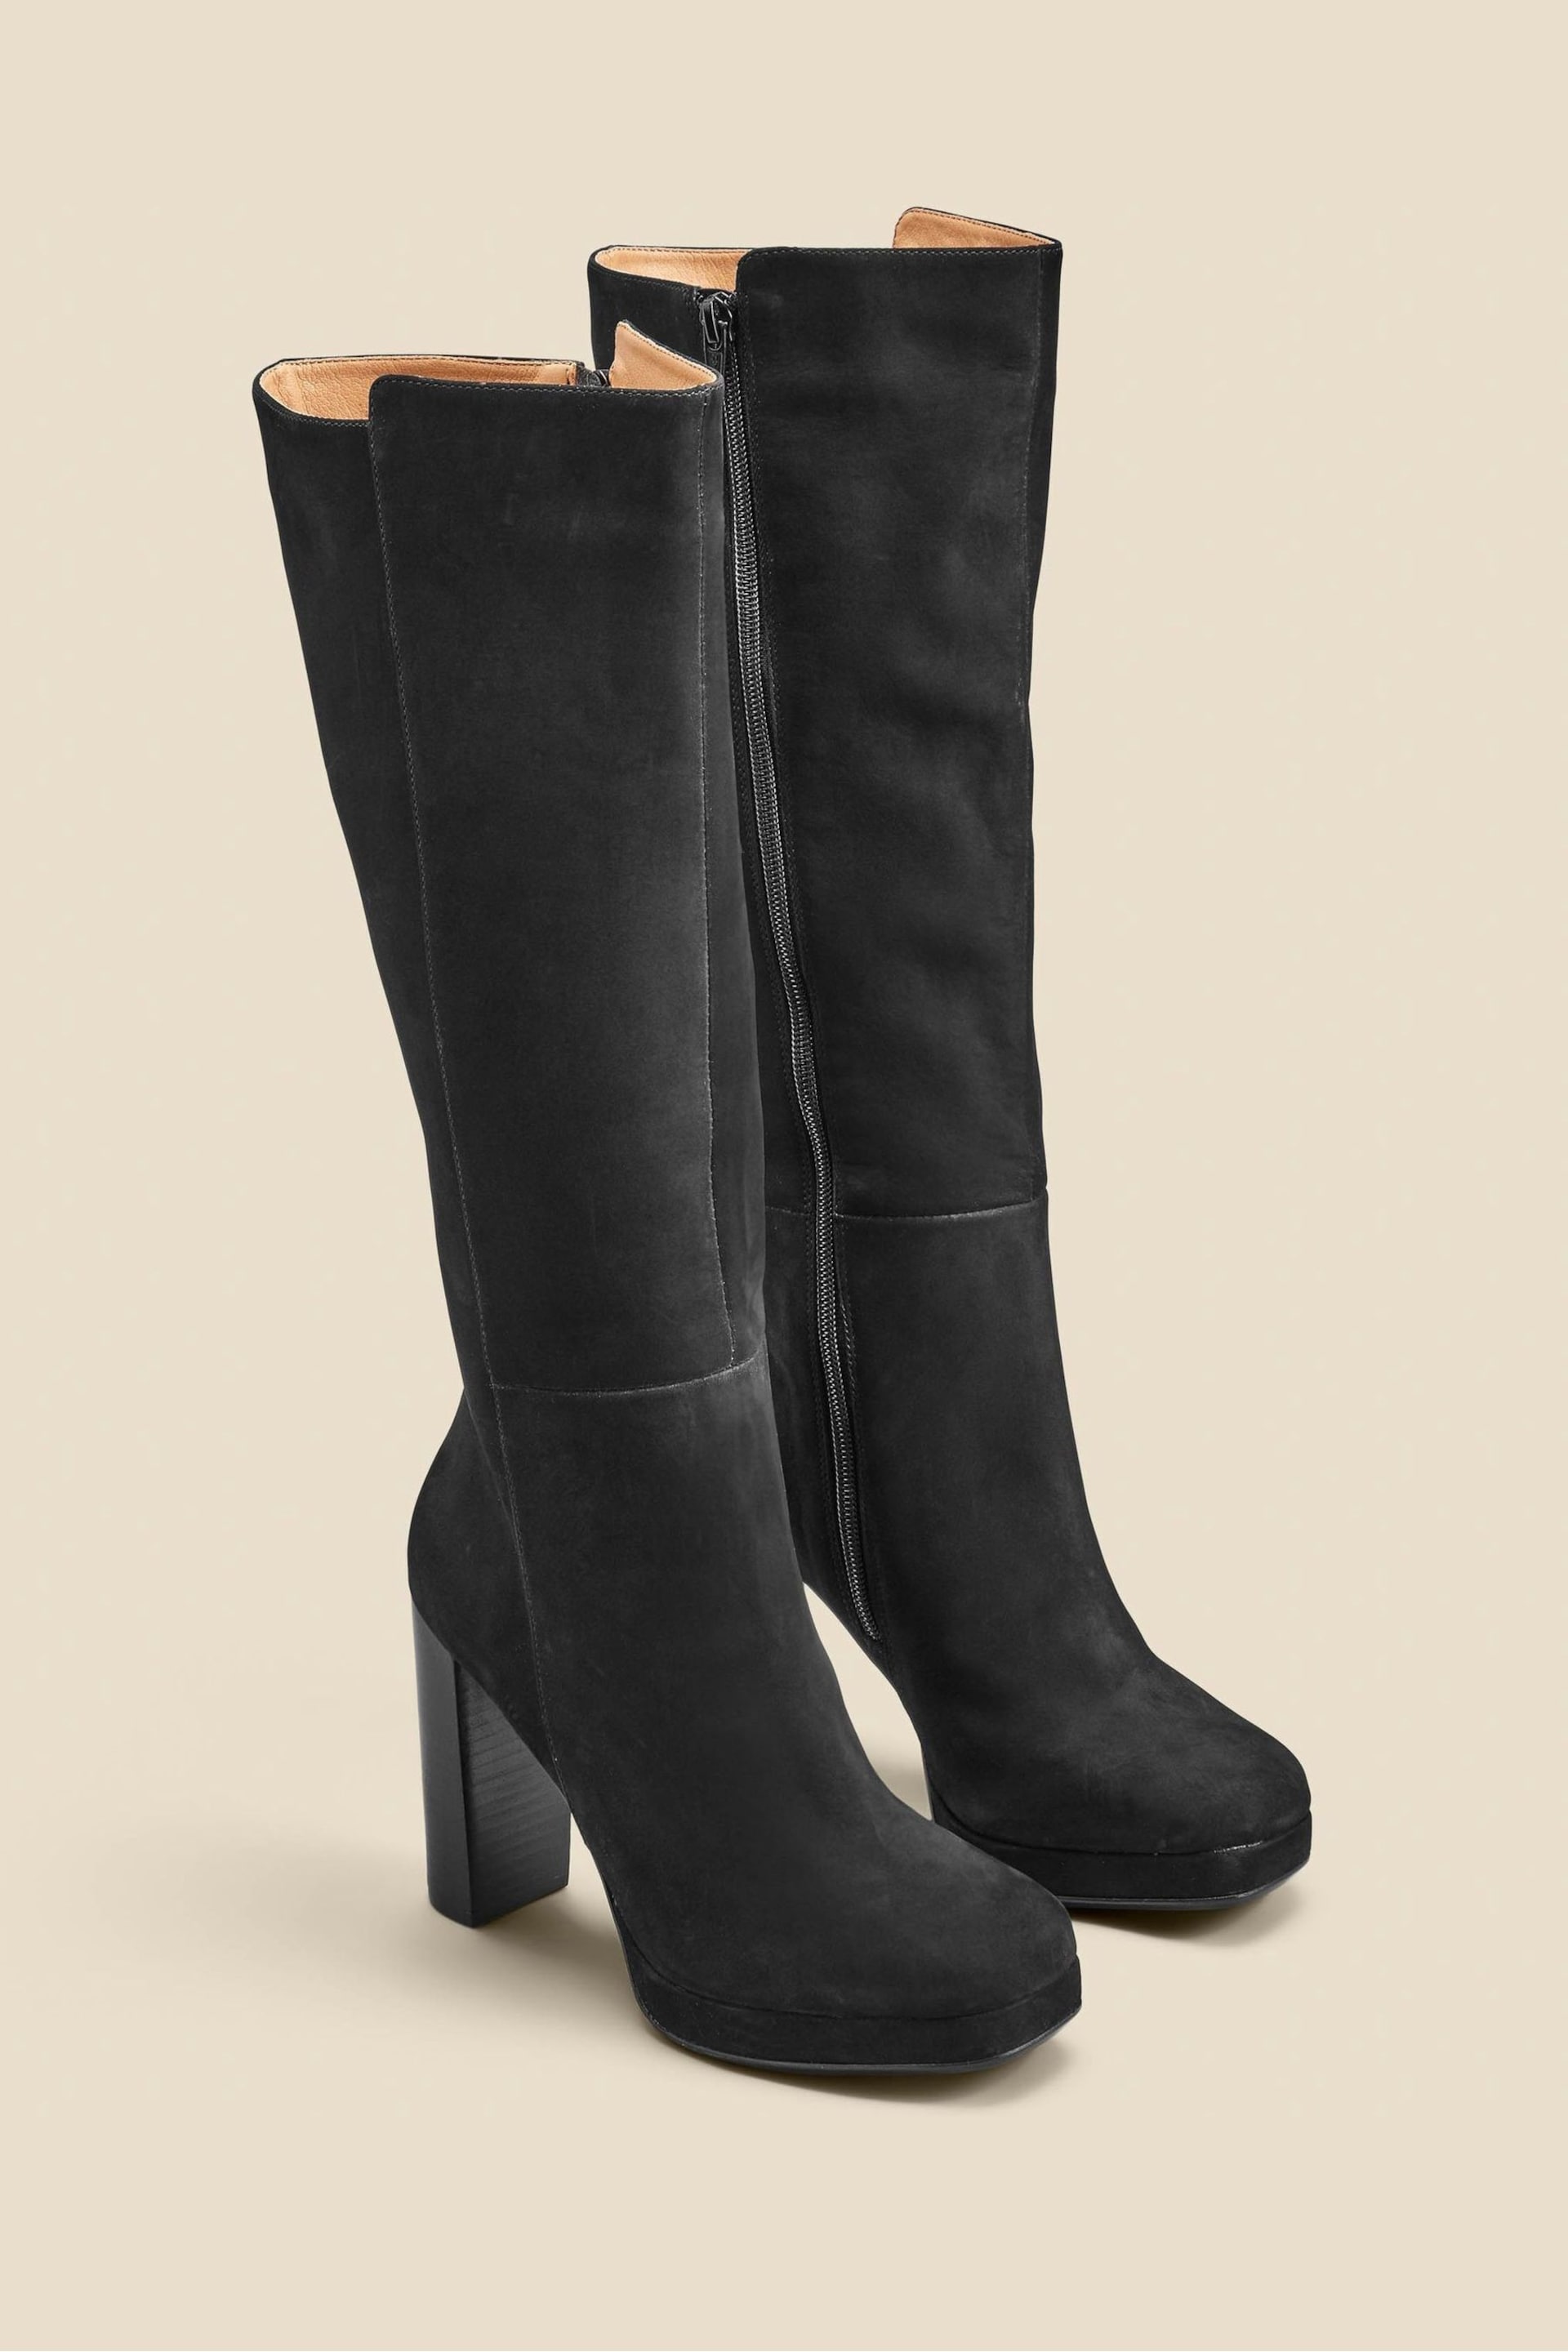 Sosandar Black Nubuck Leather Platform Block Heel Knee High Boots - Image 2 of 4